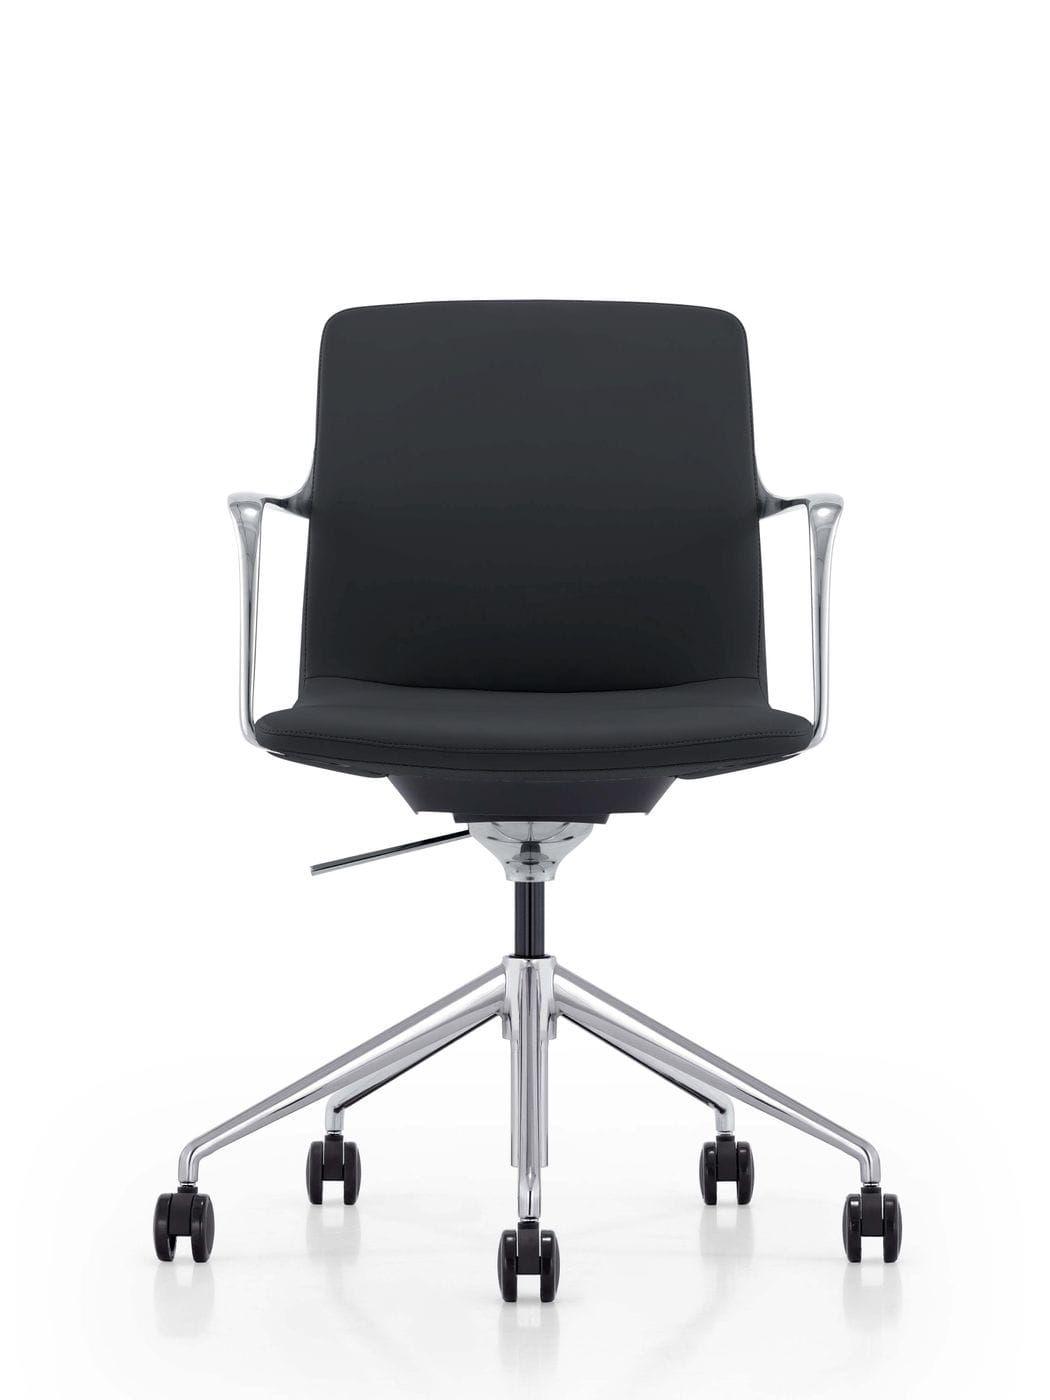 Contemporary, Modern Desk Chair Sundar VGFUFK004-B11-BLK-OC in Black Leatherette